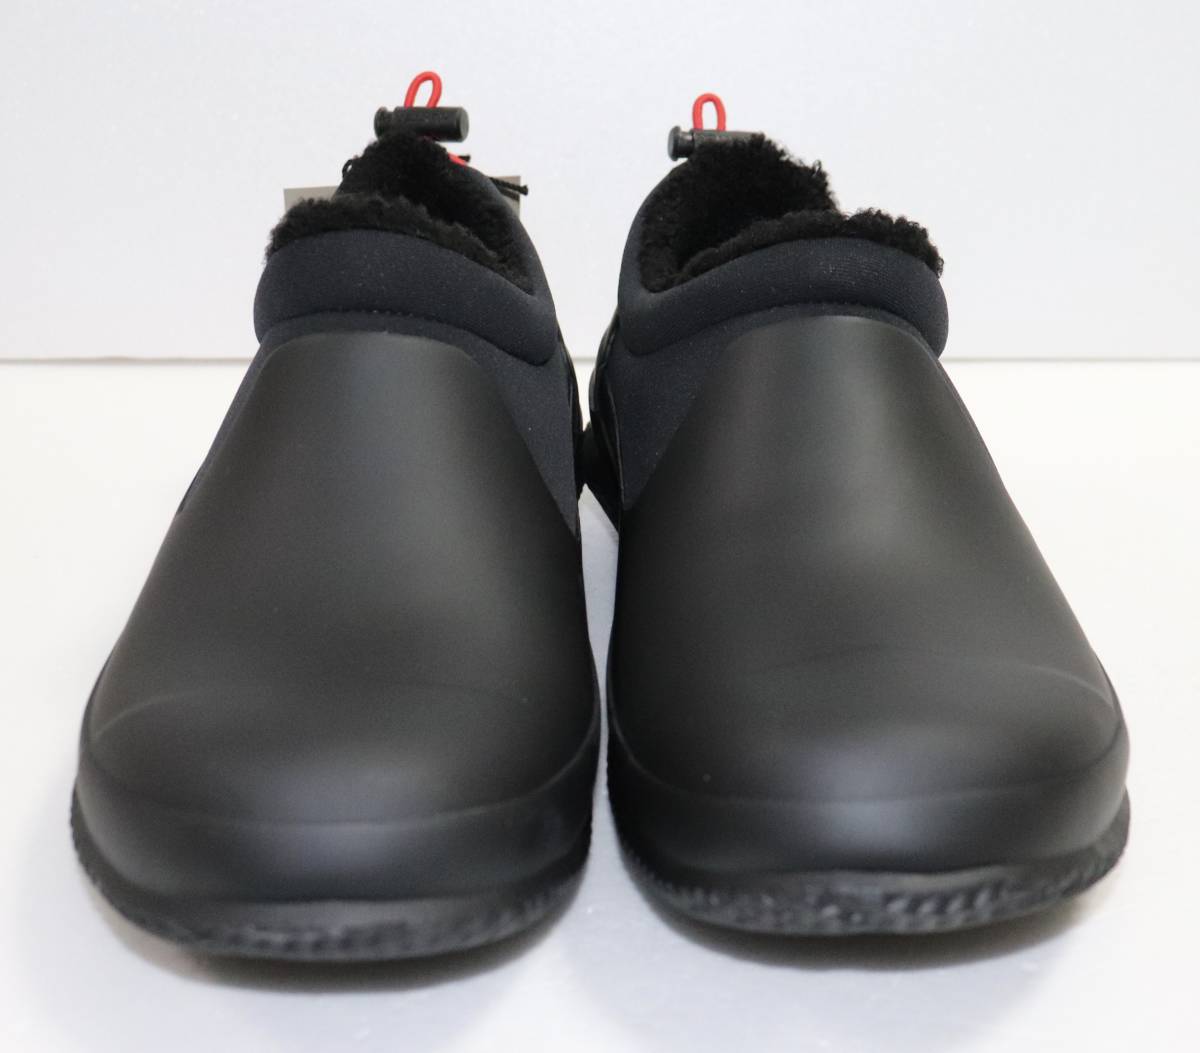  обычная цена 17050 новый товар подлинный товар HUNTER мужской оригинал in shu Ray tido Sherpa обувь Hunter MFF9111NRE JP26 US8 UK7 EU40/41 FS170